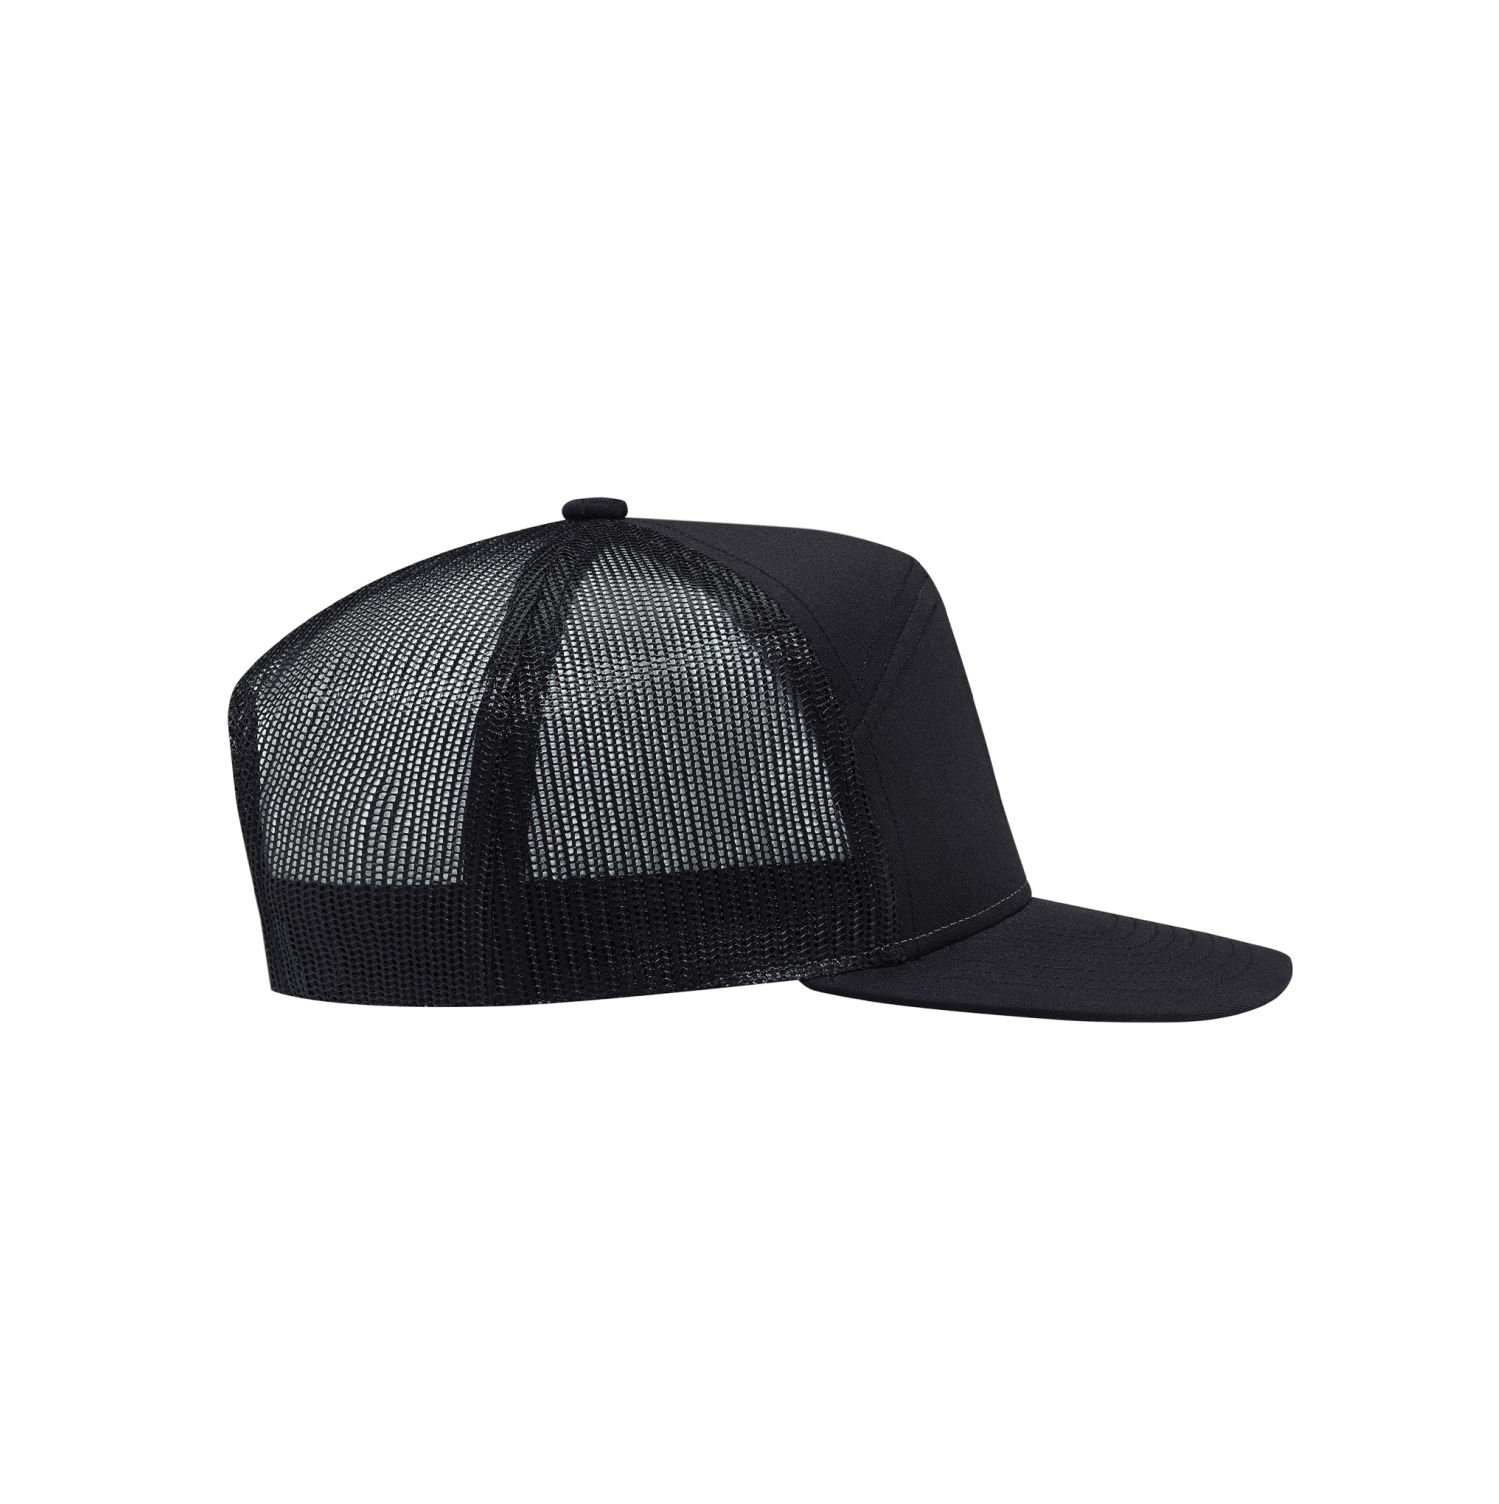 AJM Polycotton / Nylon Mesh 7 Panel Constructed Camper Style Hat (Mesh Back) #3D410M Black Side